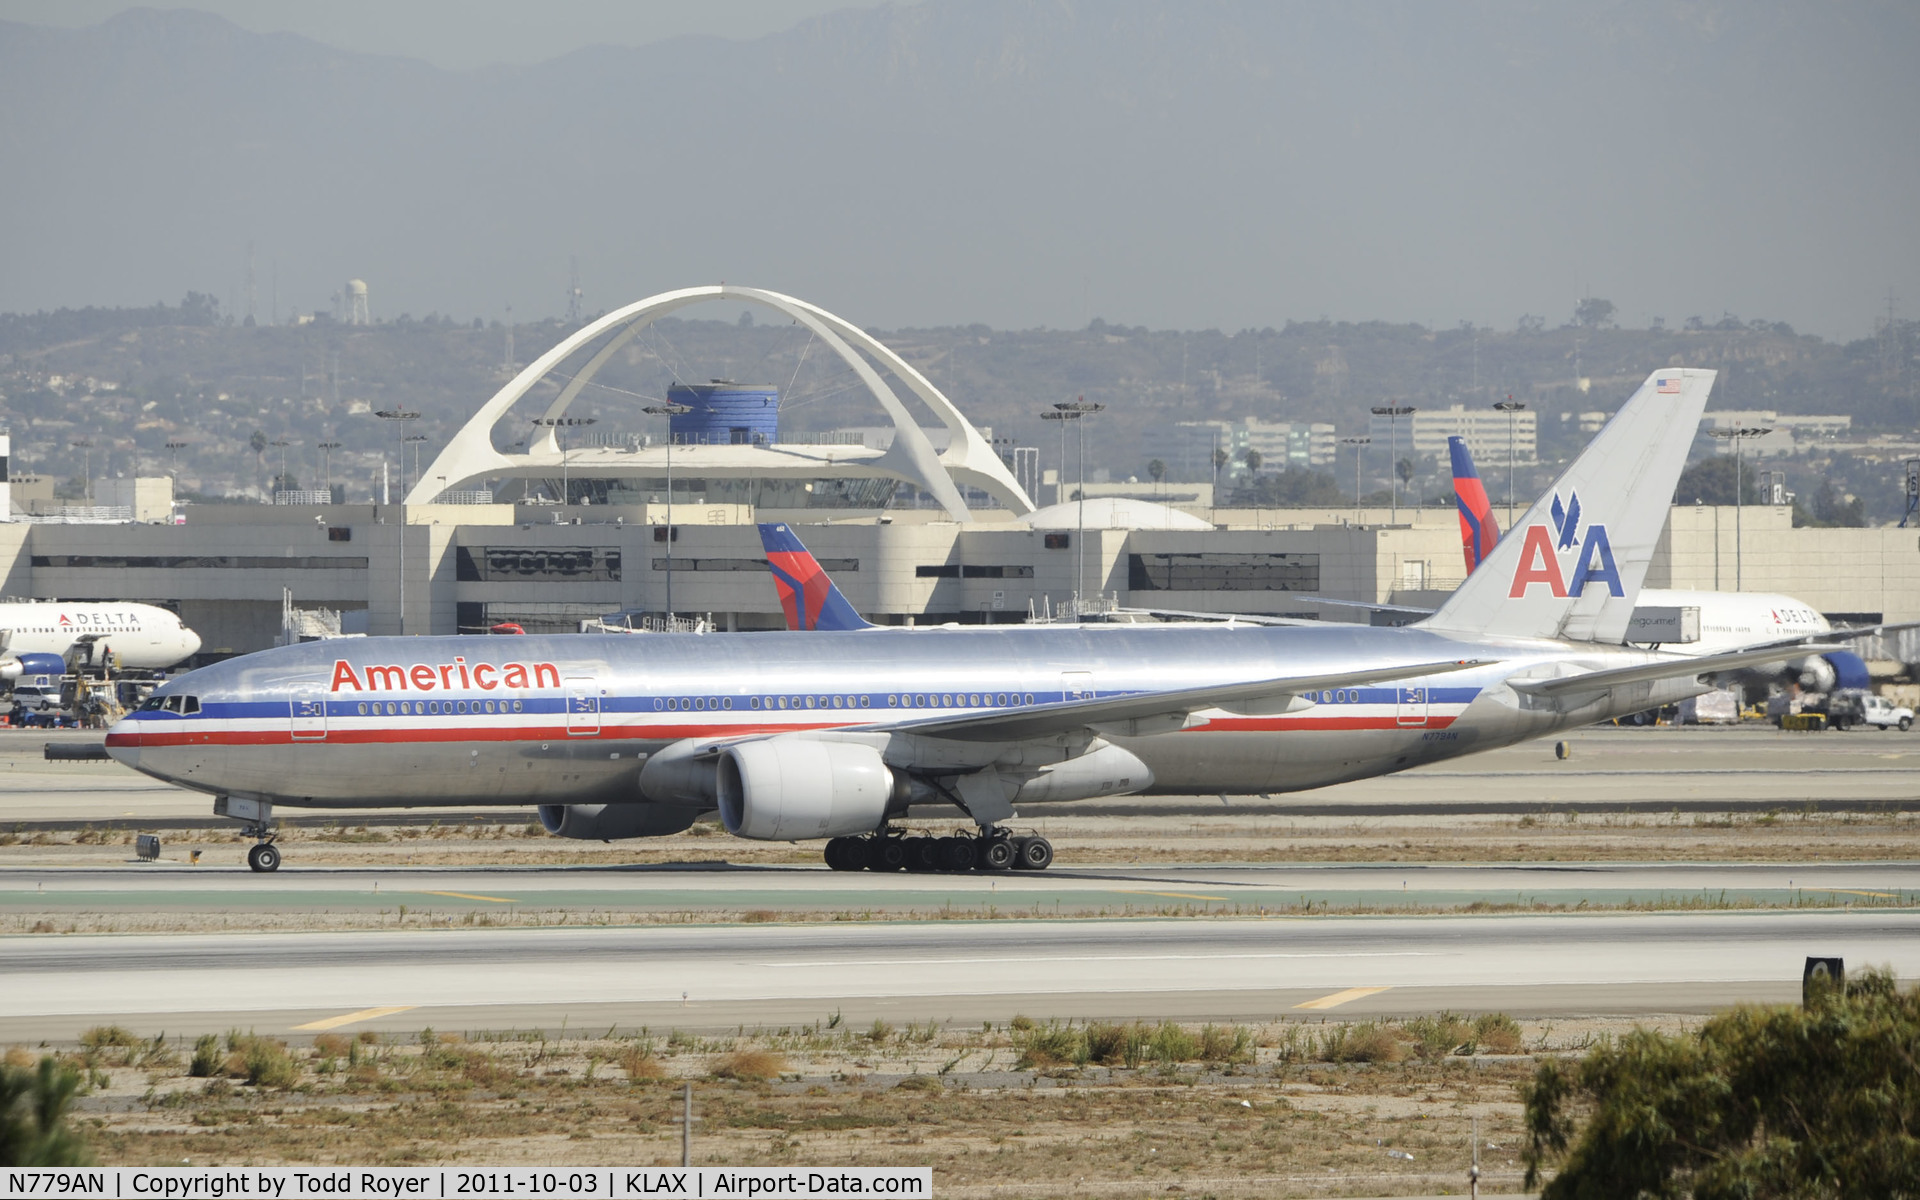 N779AN, 1999 Boeing 777-223 C/N 29955, Arriving at LAX